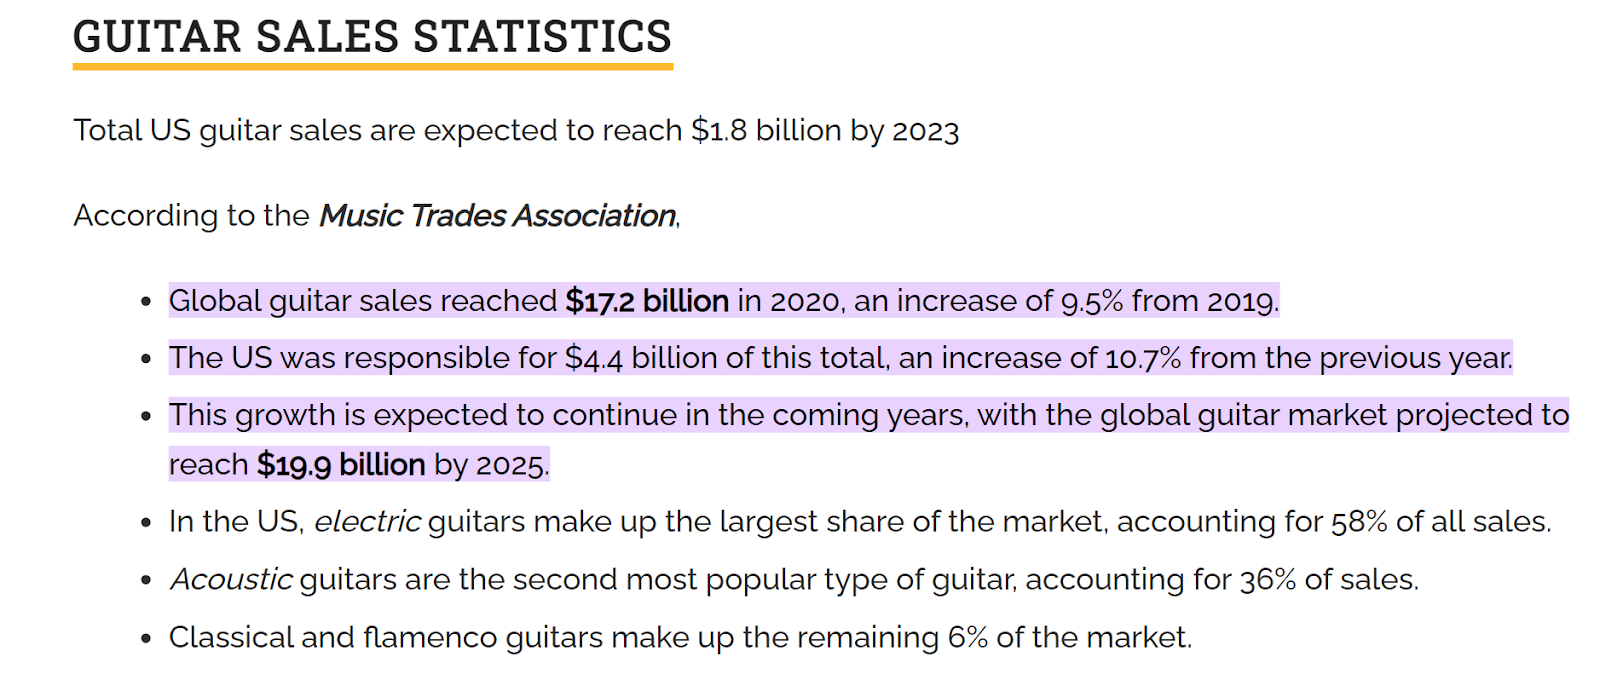 Guitar sales statistics globally